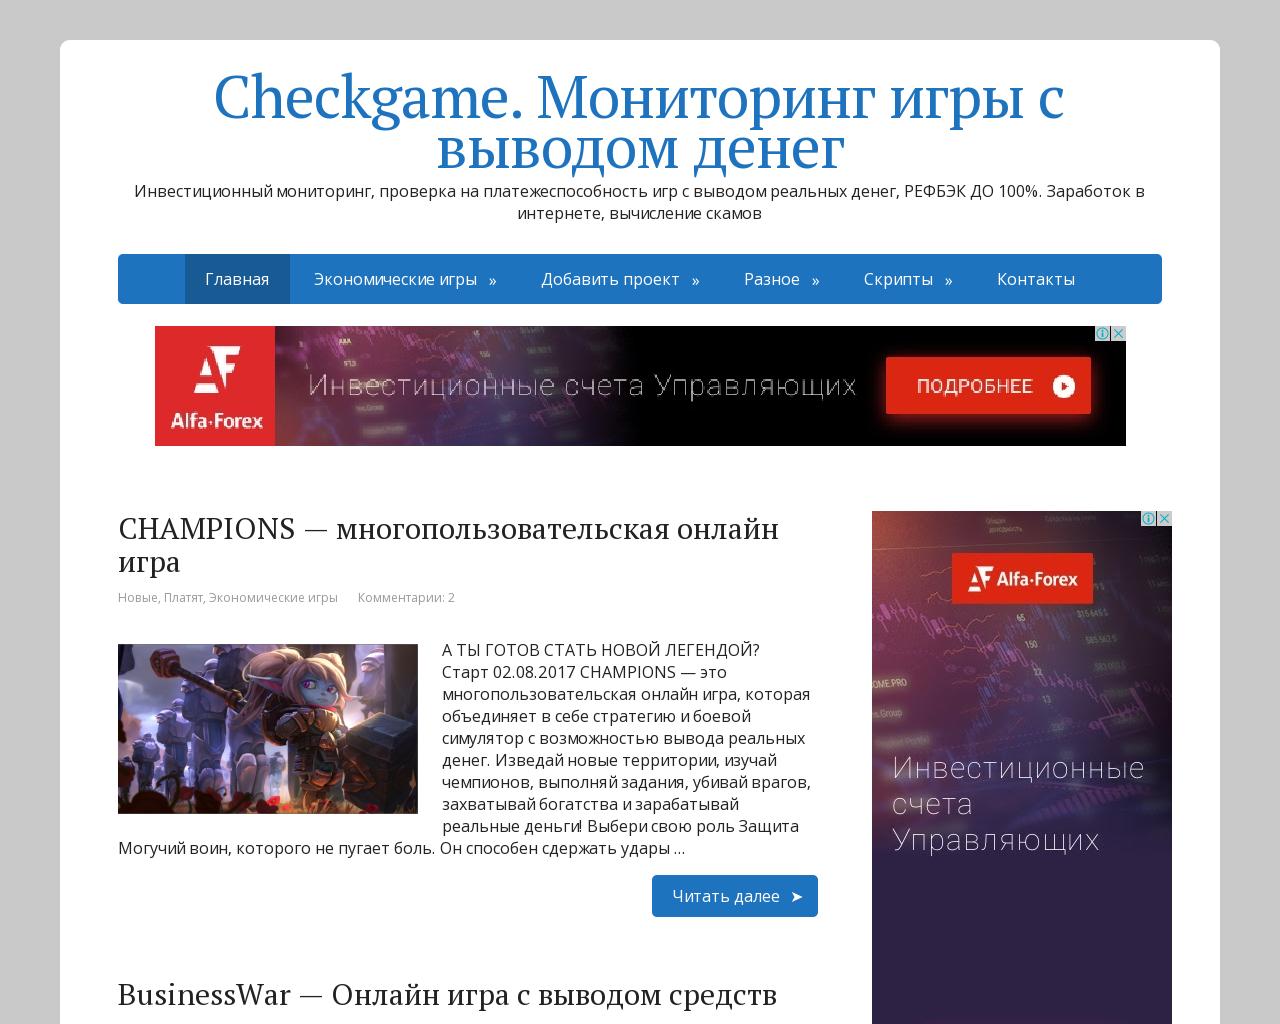 Изображение сайта checkgame.ru в разрешении 1280x1024